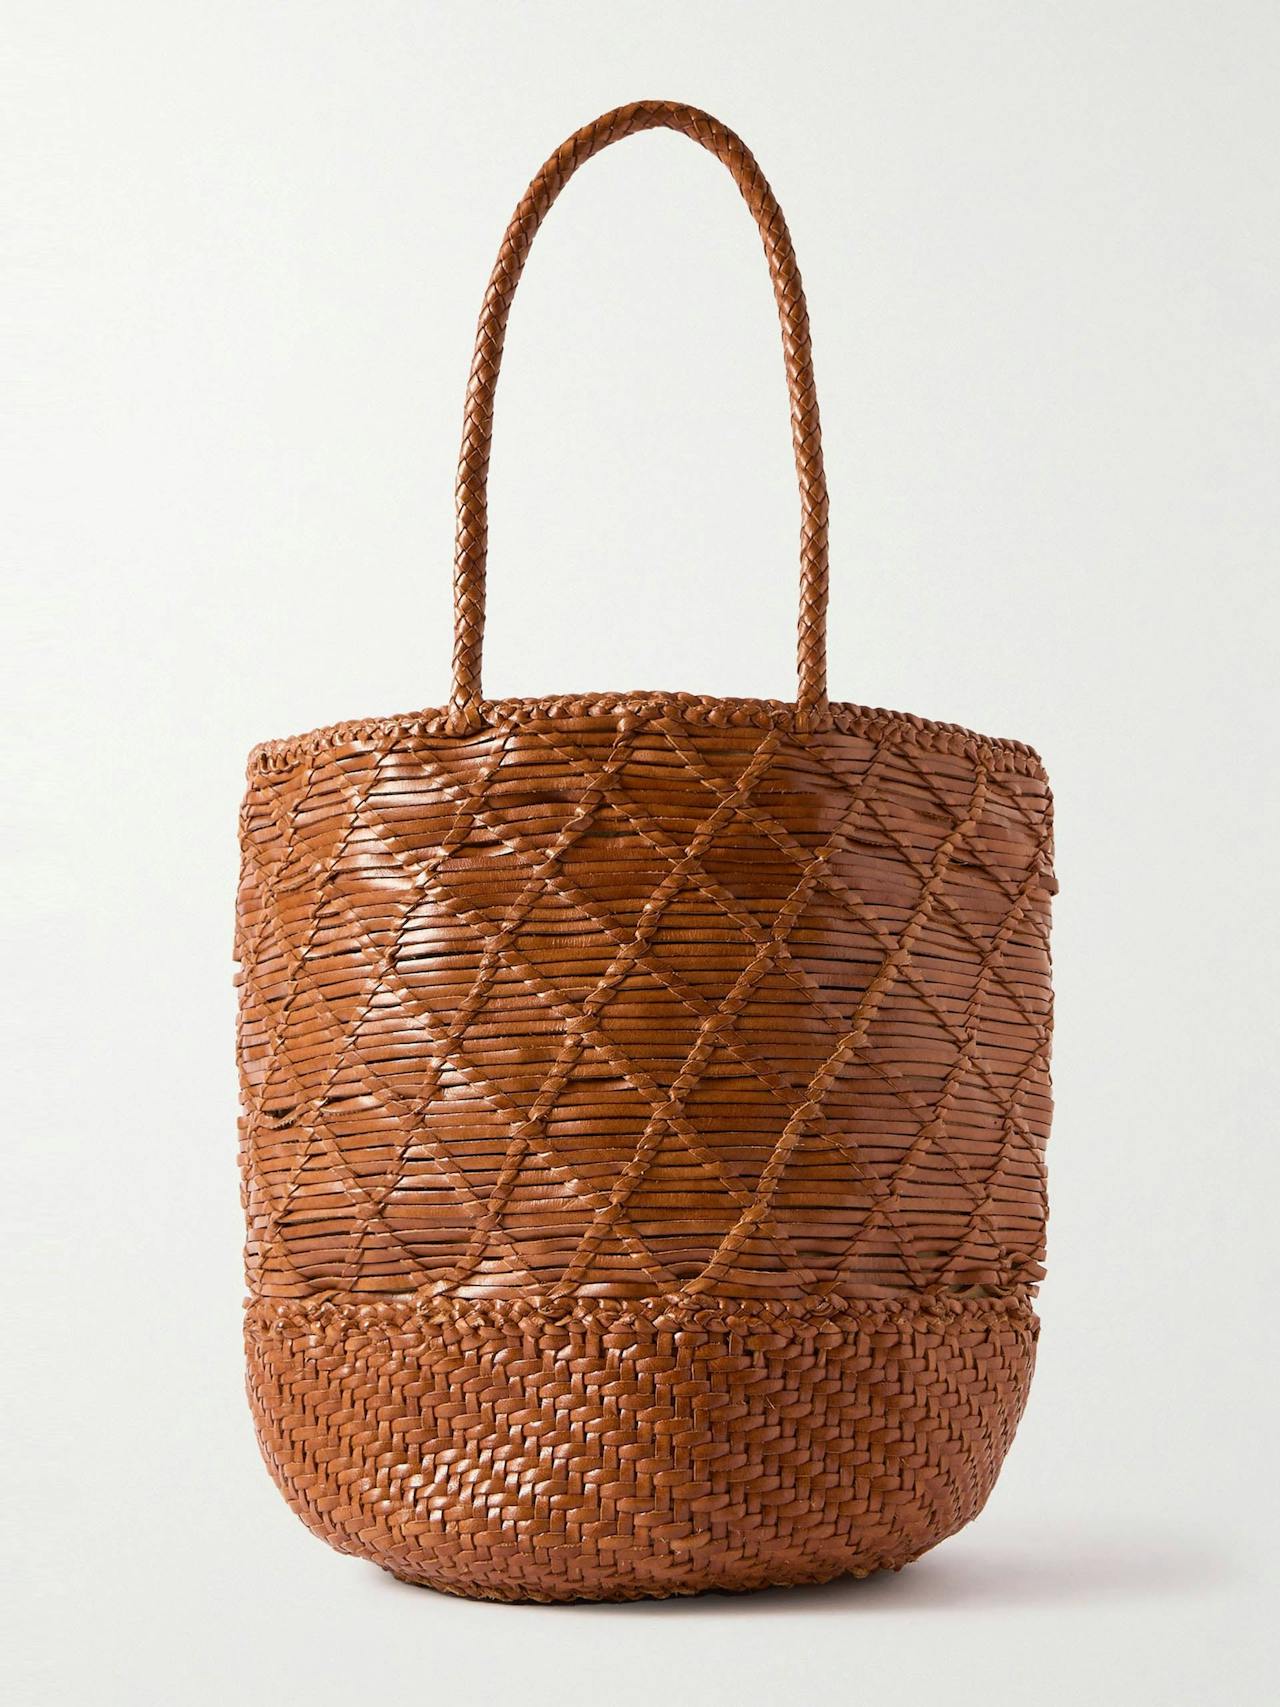 Corso woven leather bucket bag